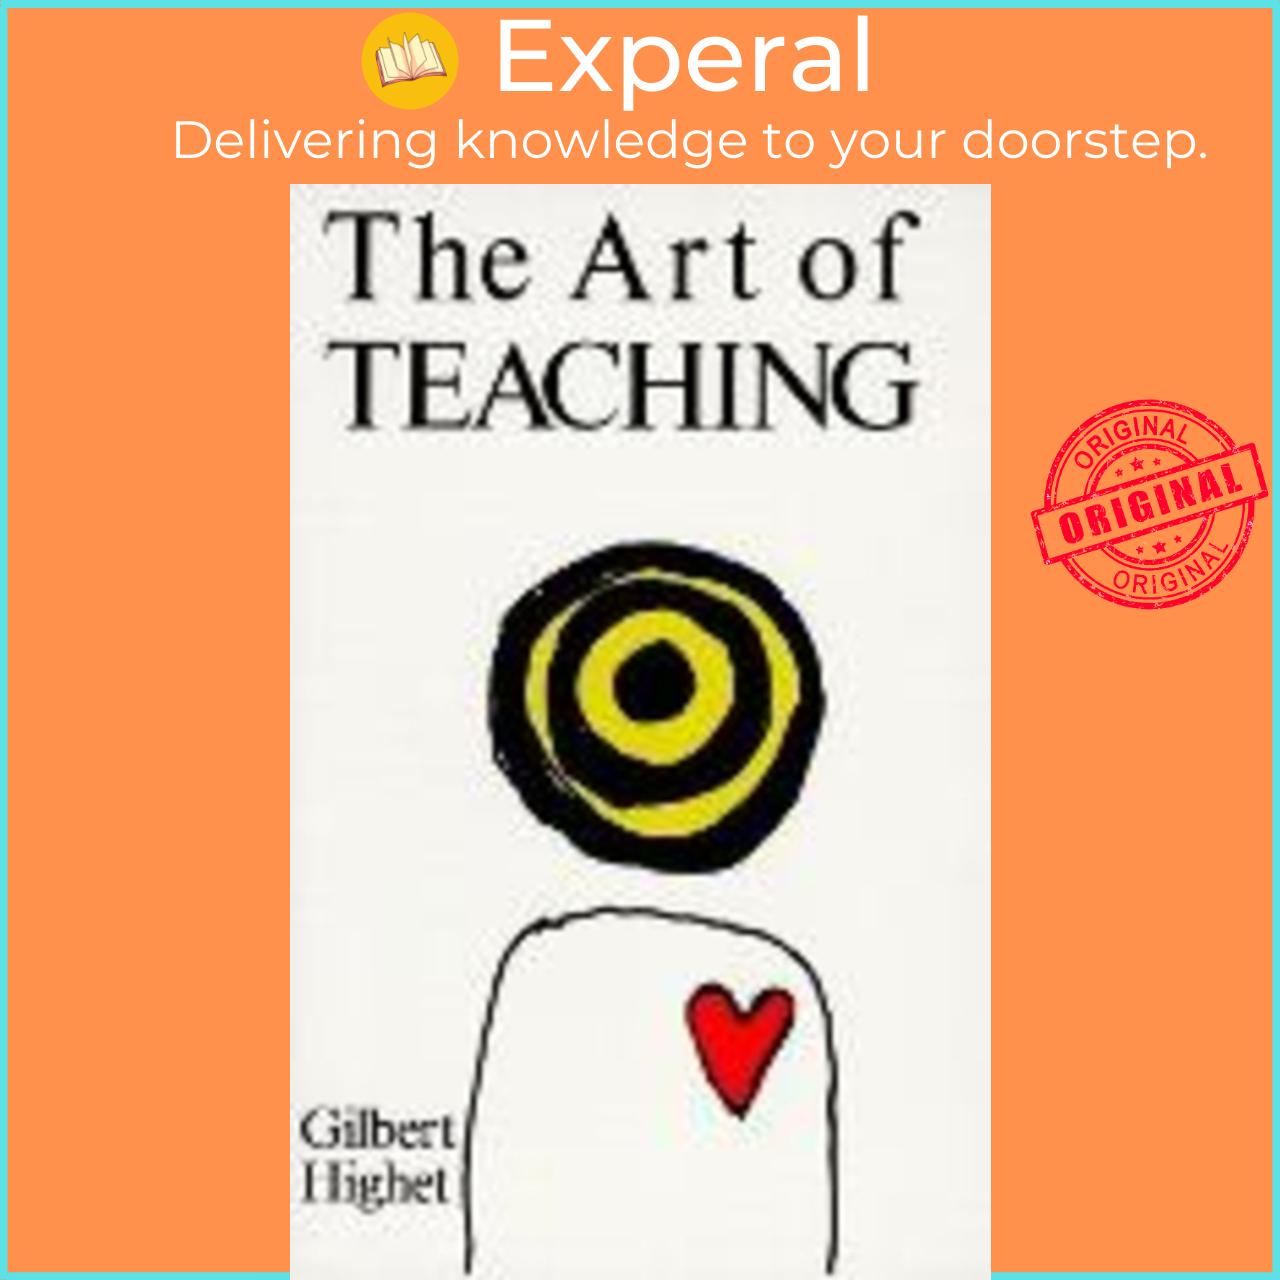 Sách - The Art of Teaching by Gilbert Highet (US edition, paperback)